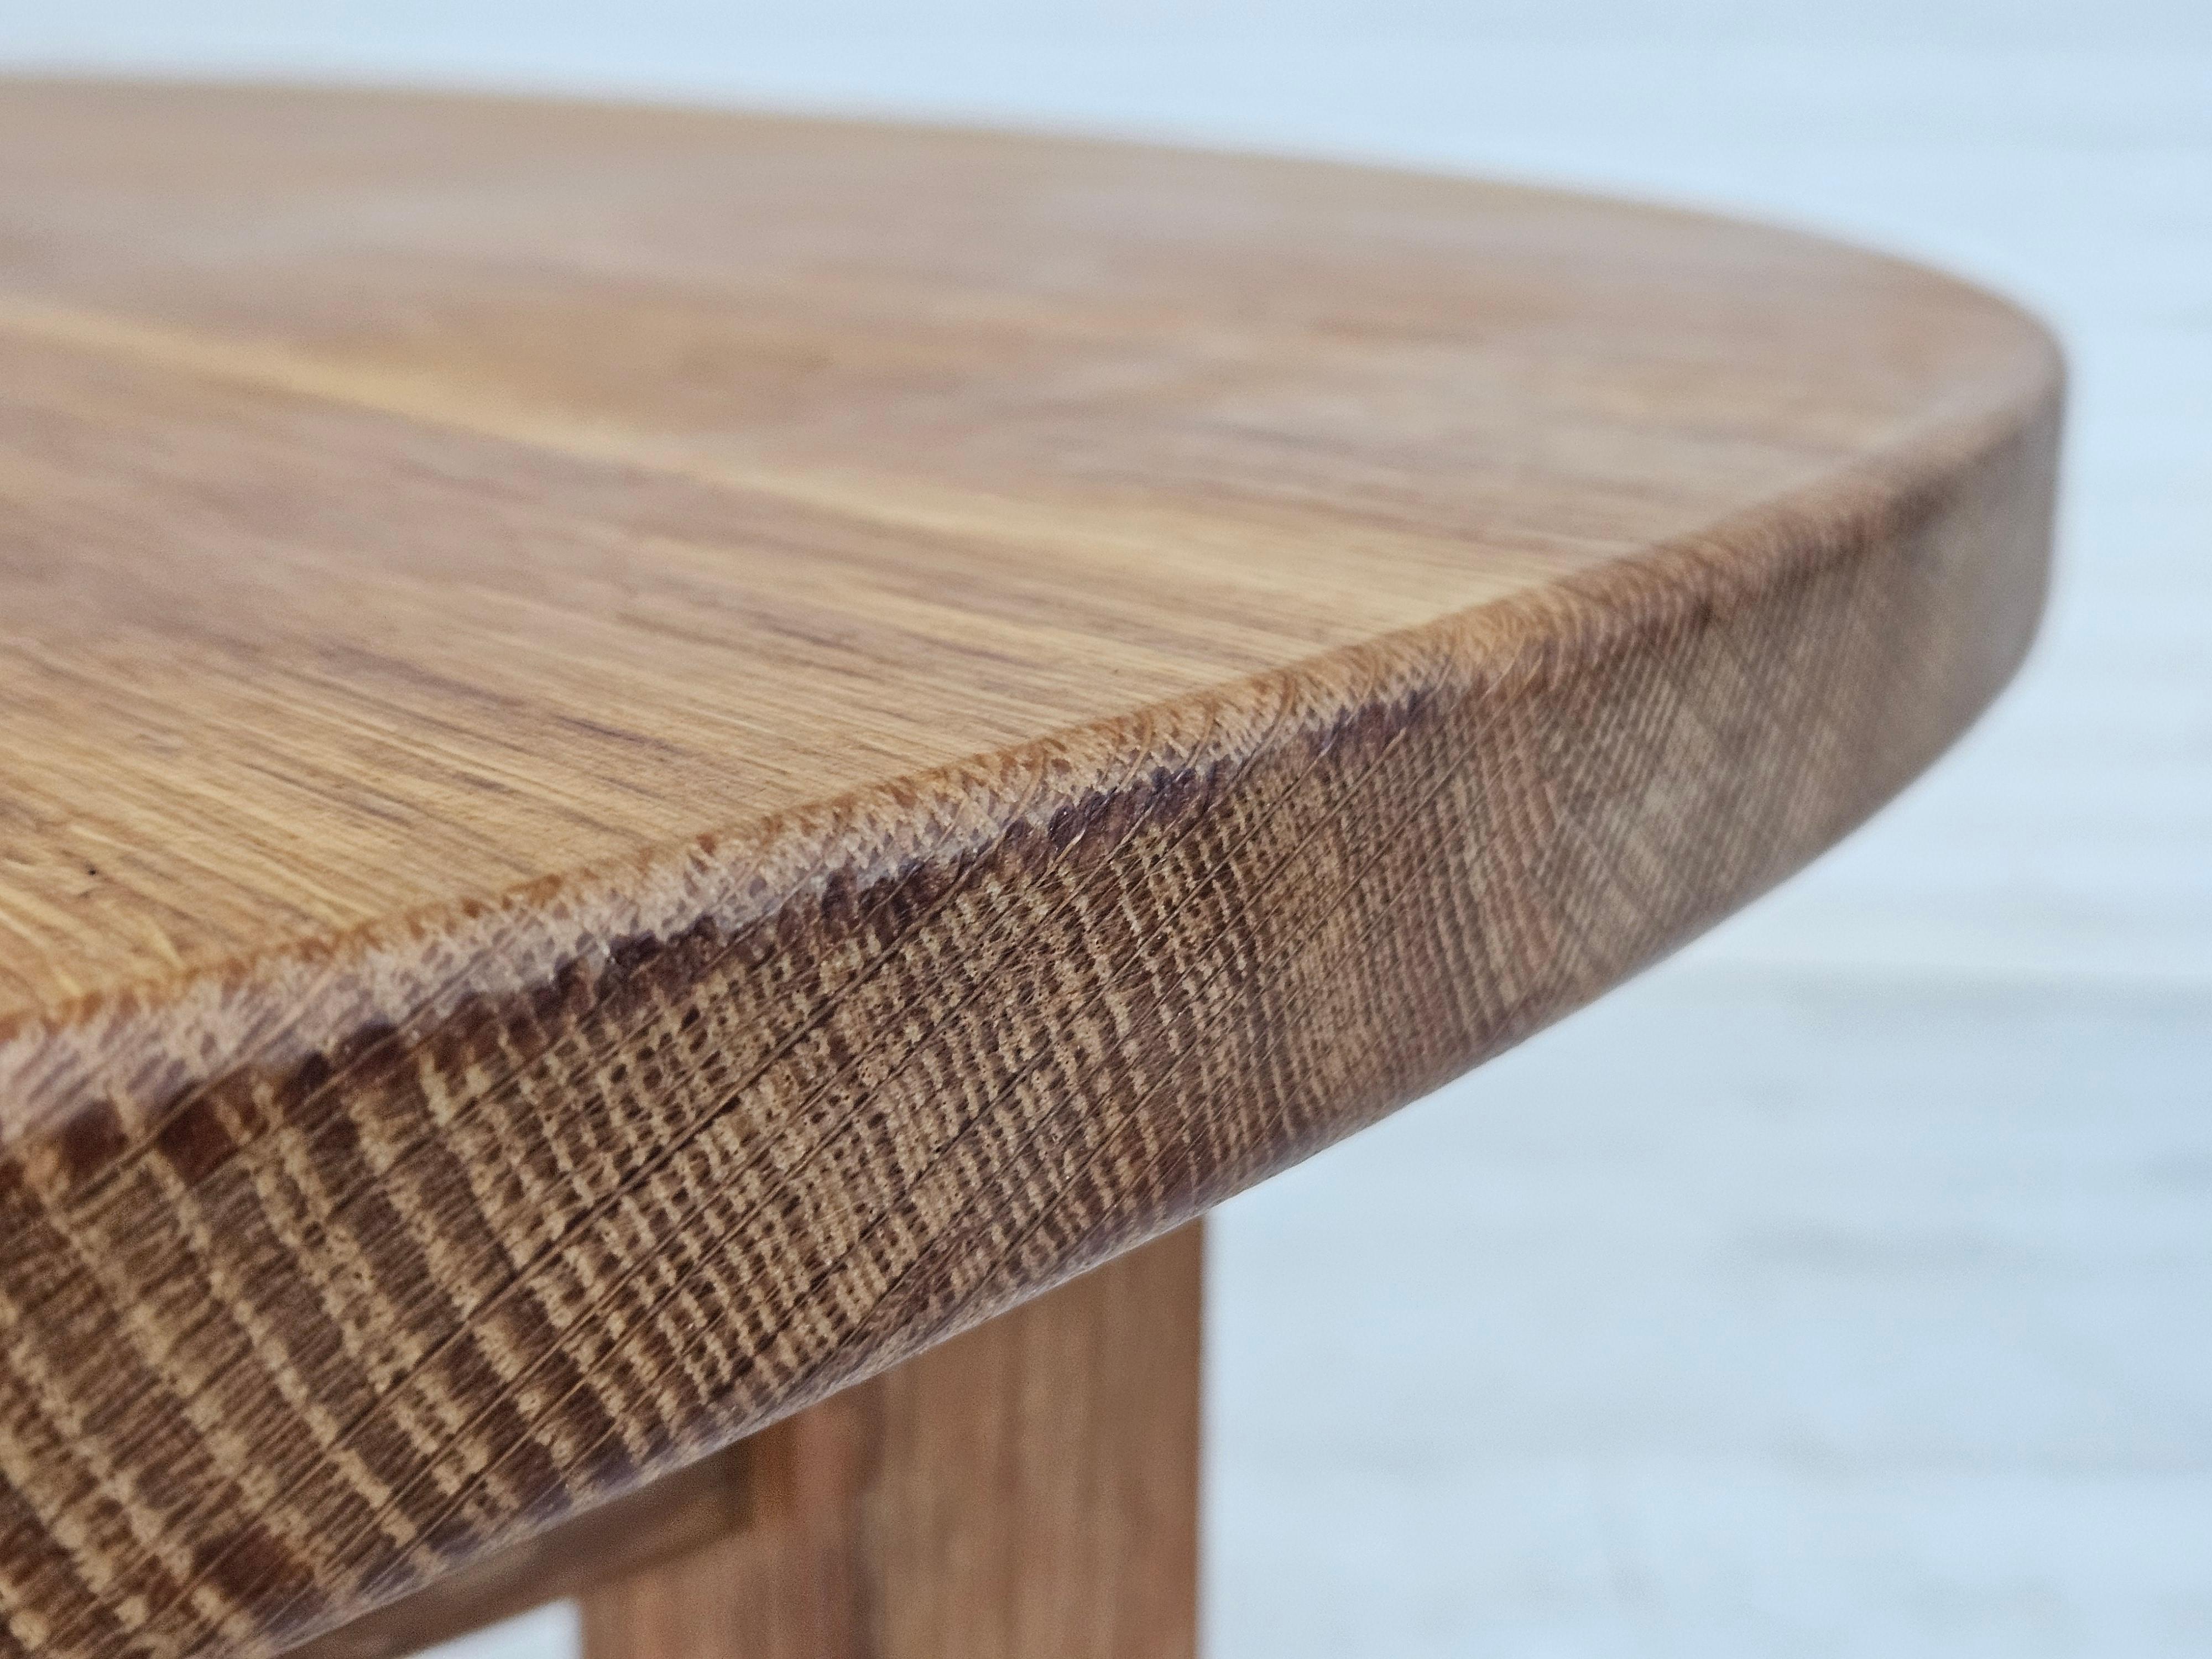 Scandinavian Modern 1970s, Danish dining table, solid oak wood, original condition. For Sale